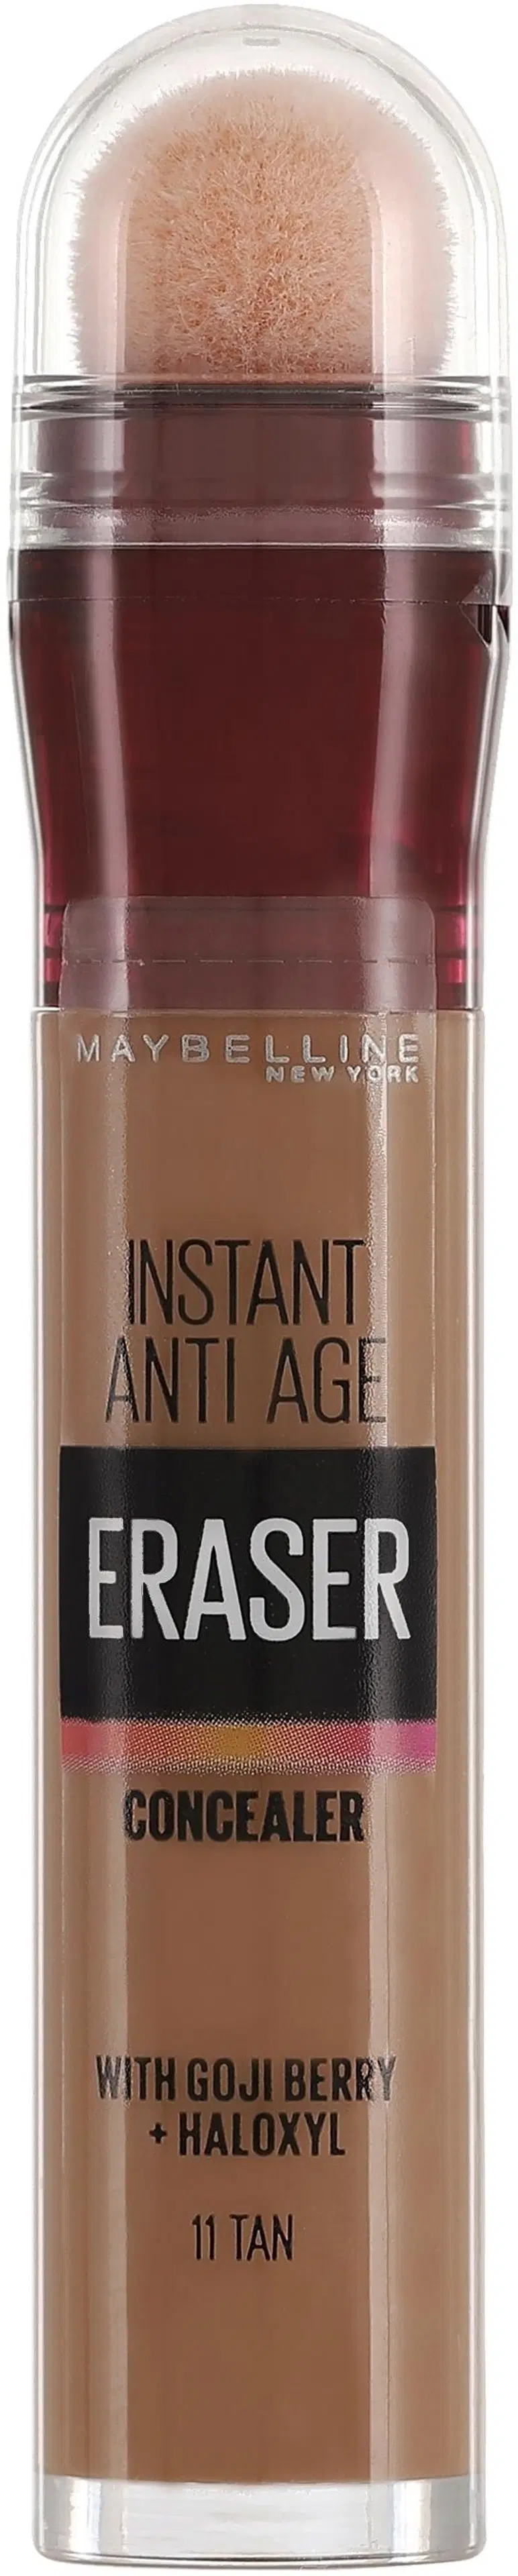 Maybelline New York Instant Anti Age Eraser 11 Tan peitevoide 6,8ml